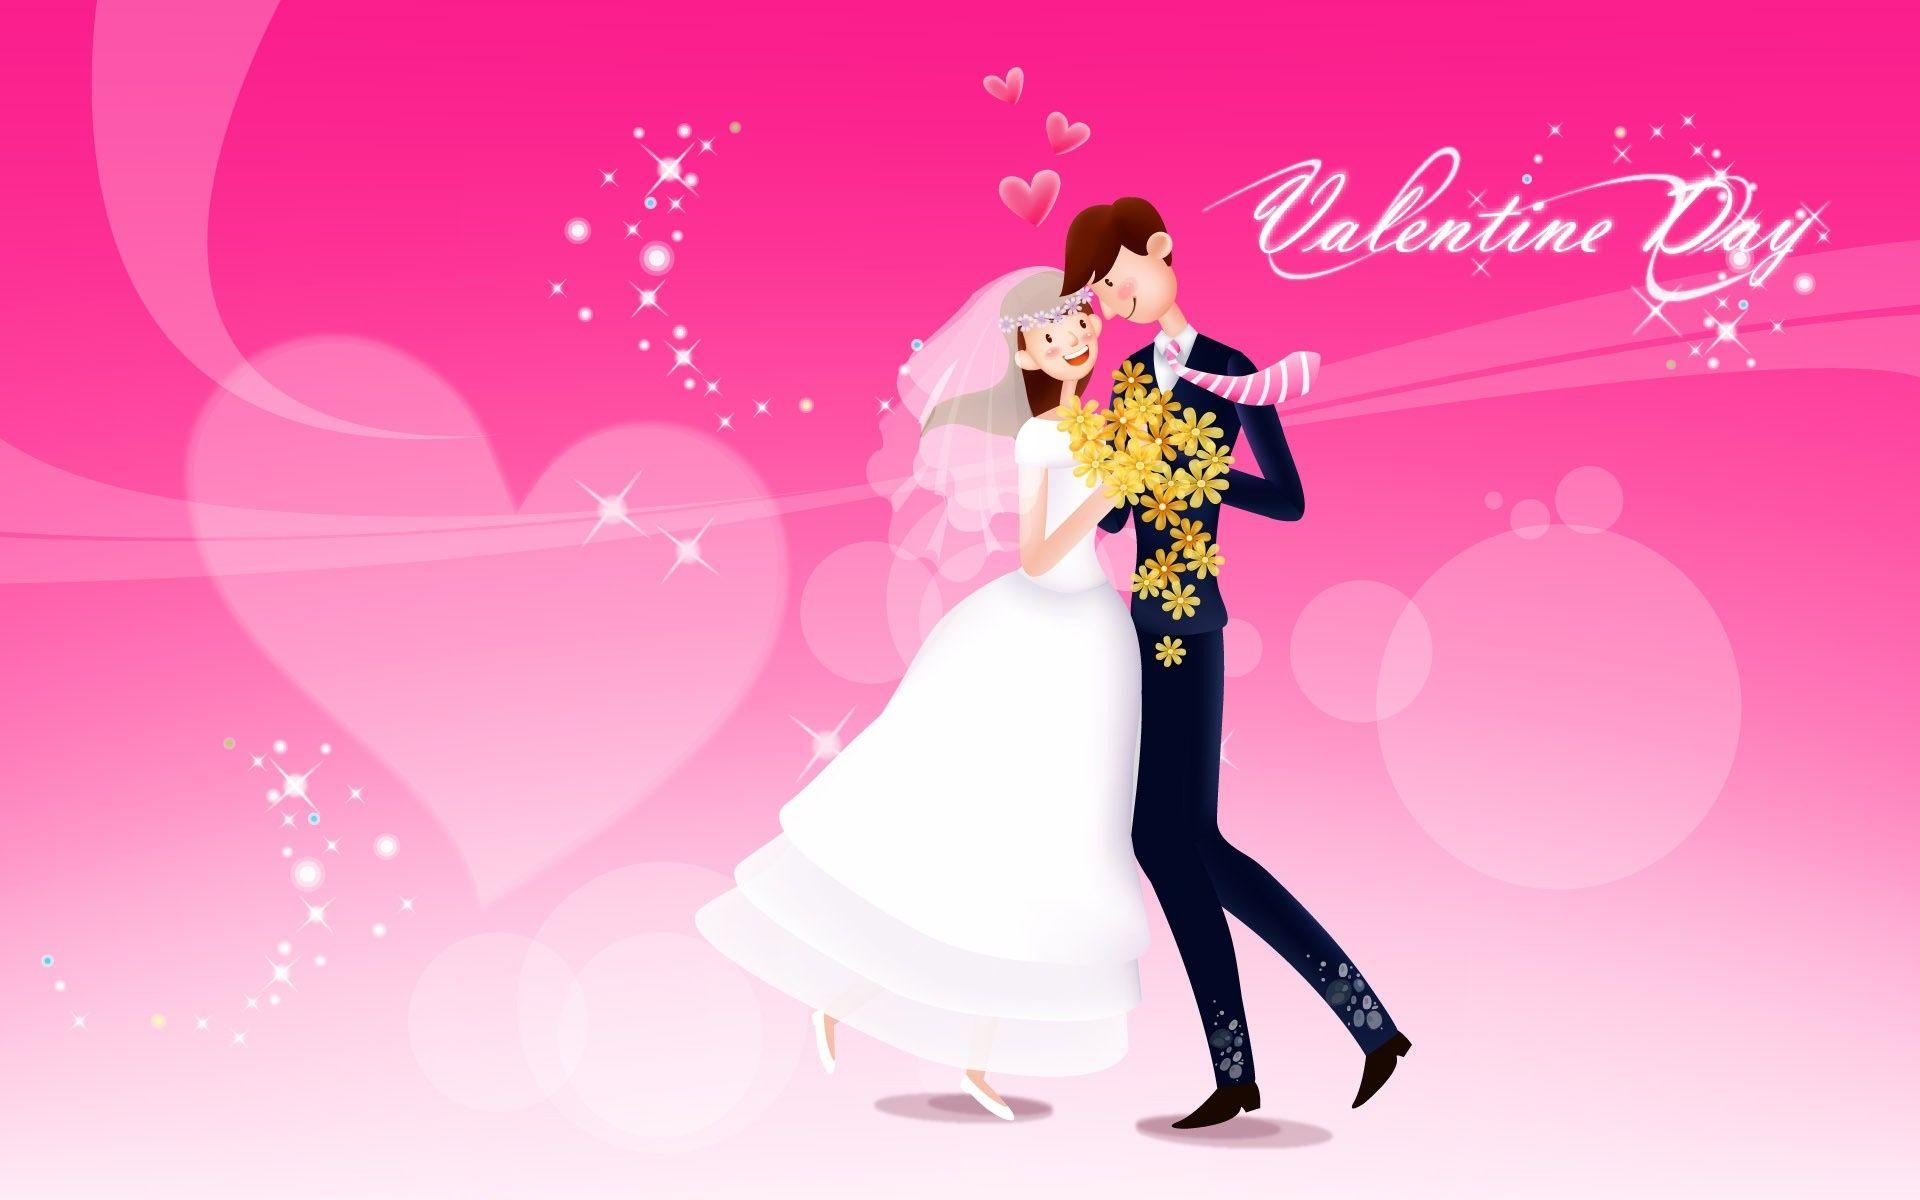 Valentine Day Love Dance Wallpaper in jpg format for free download